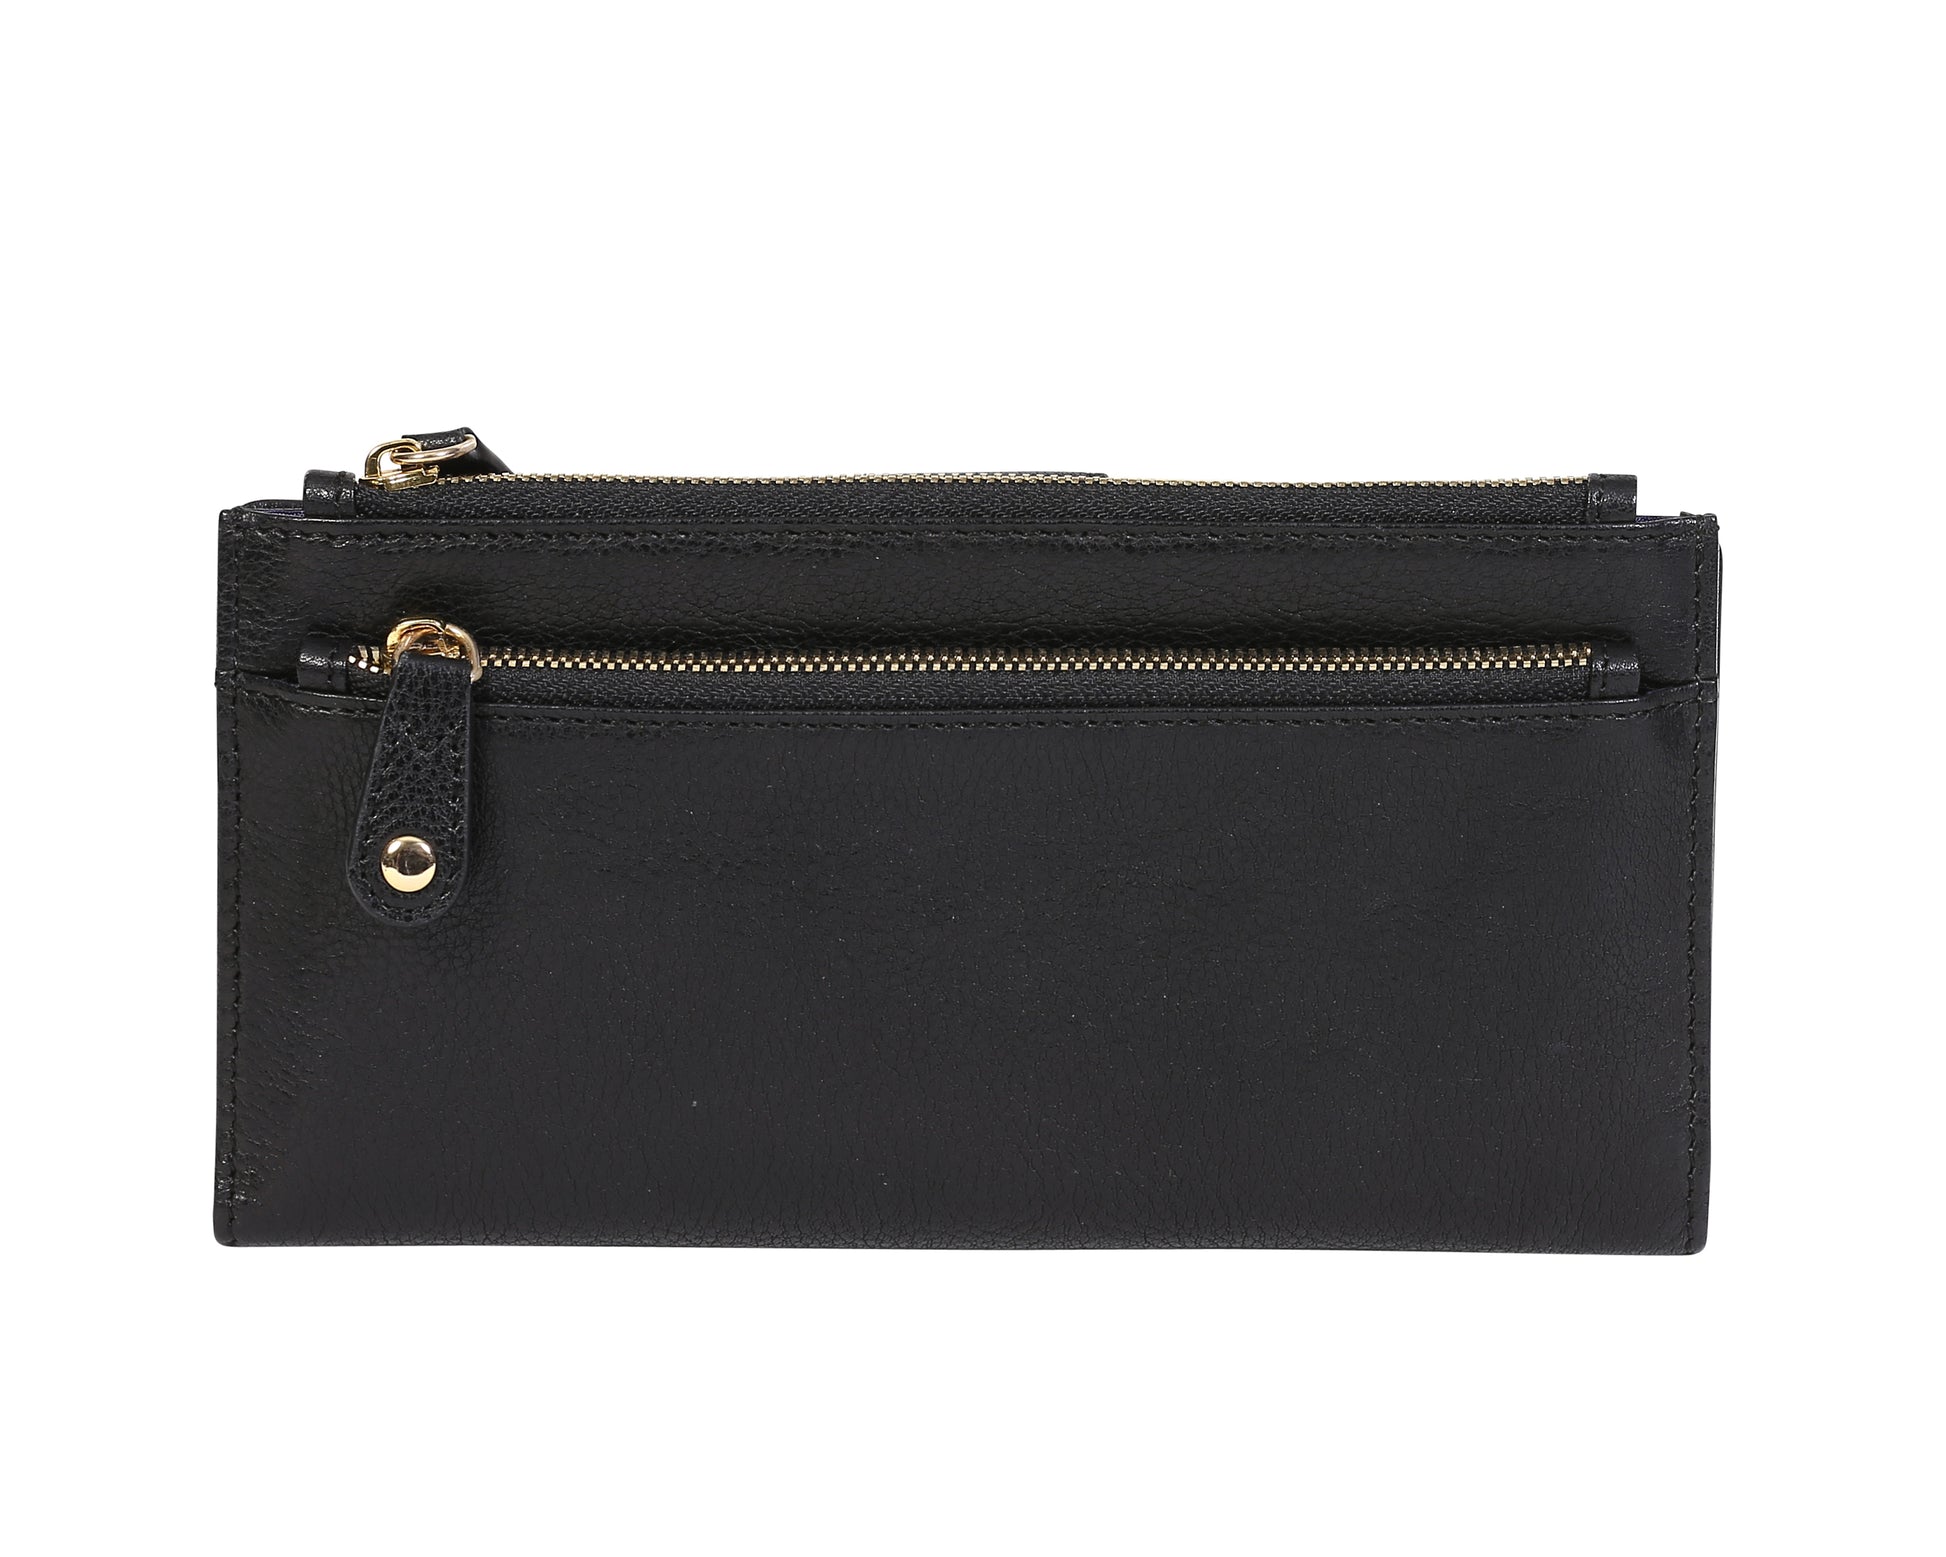 Modapelle Leather Black Wallet 7304 - rainbowbags